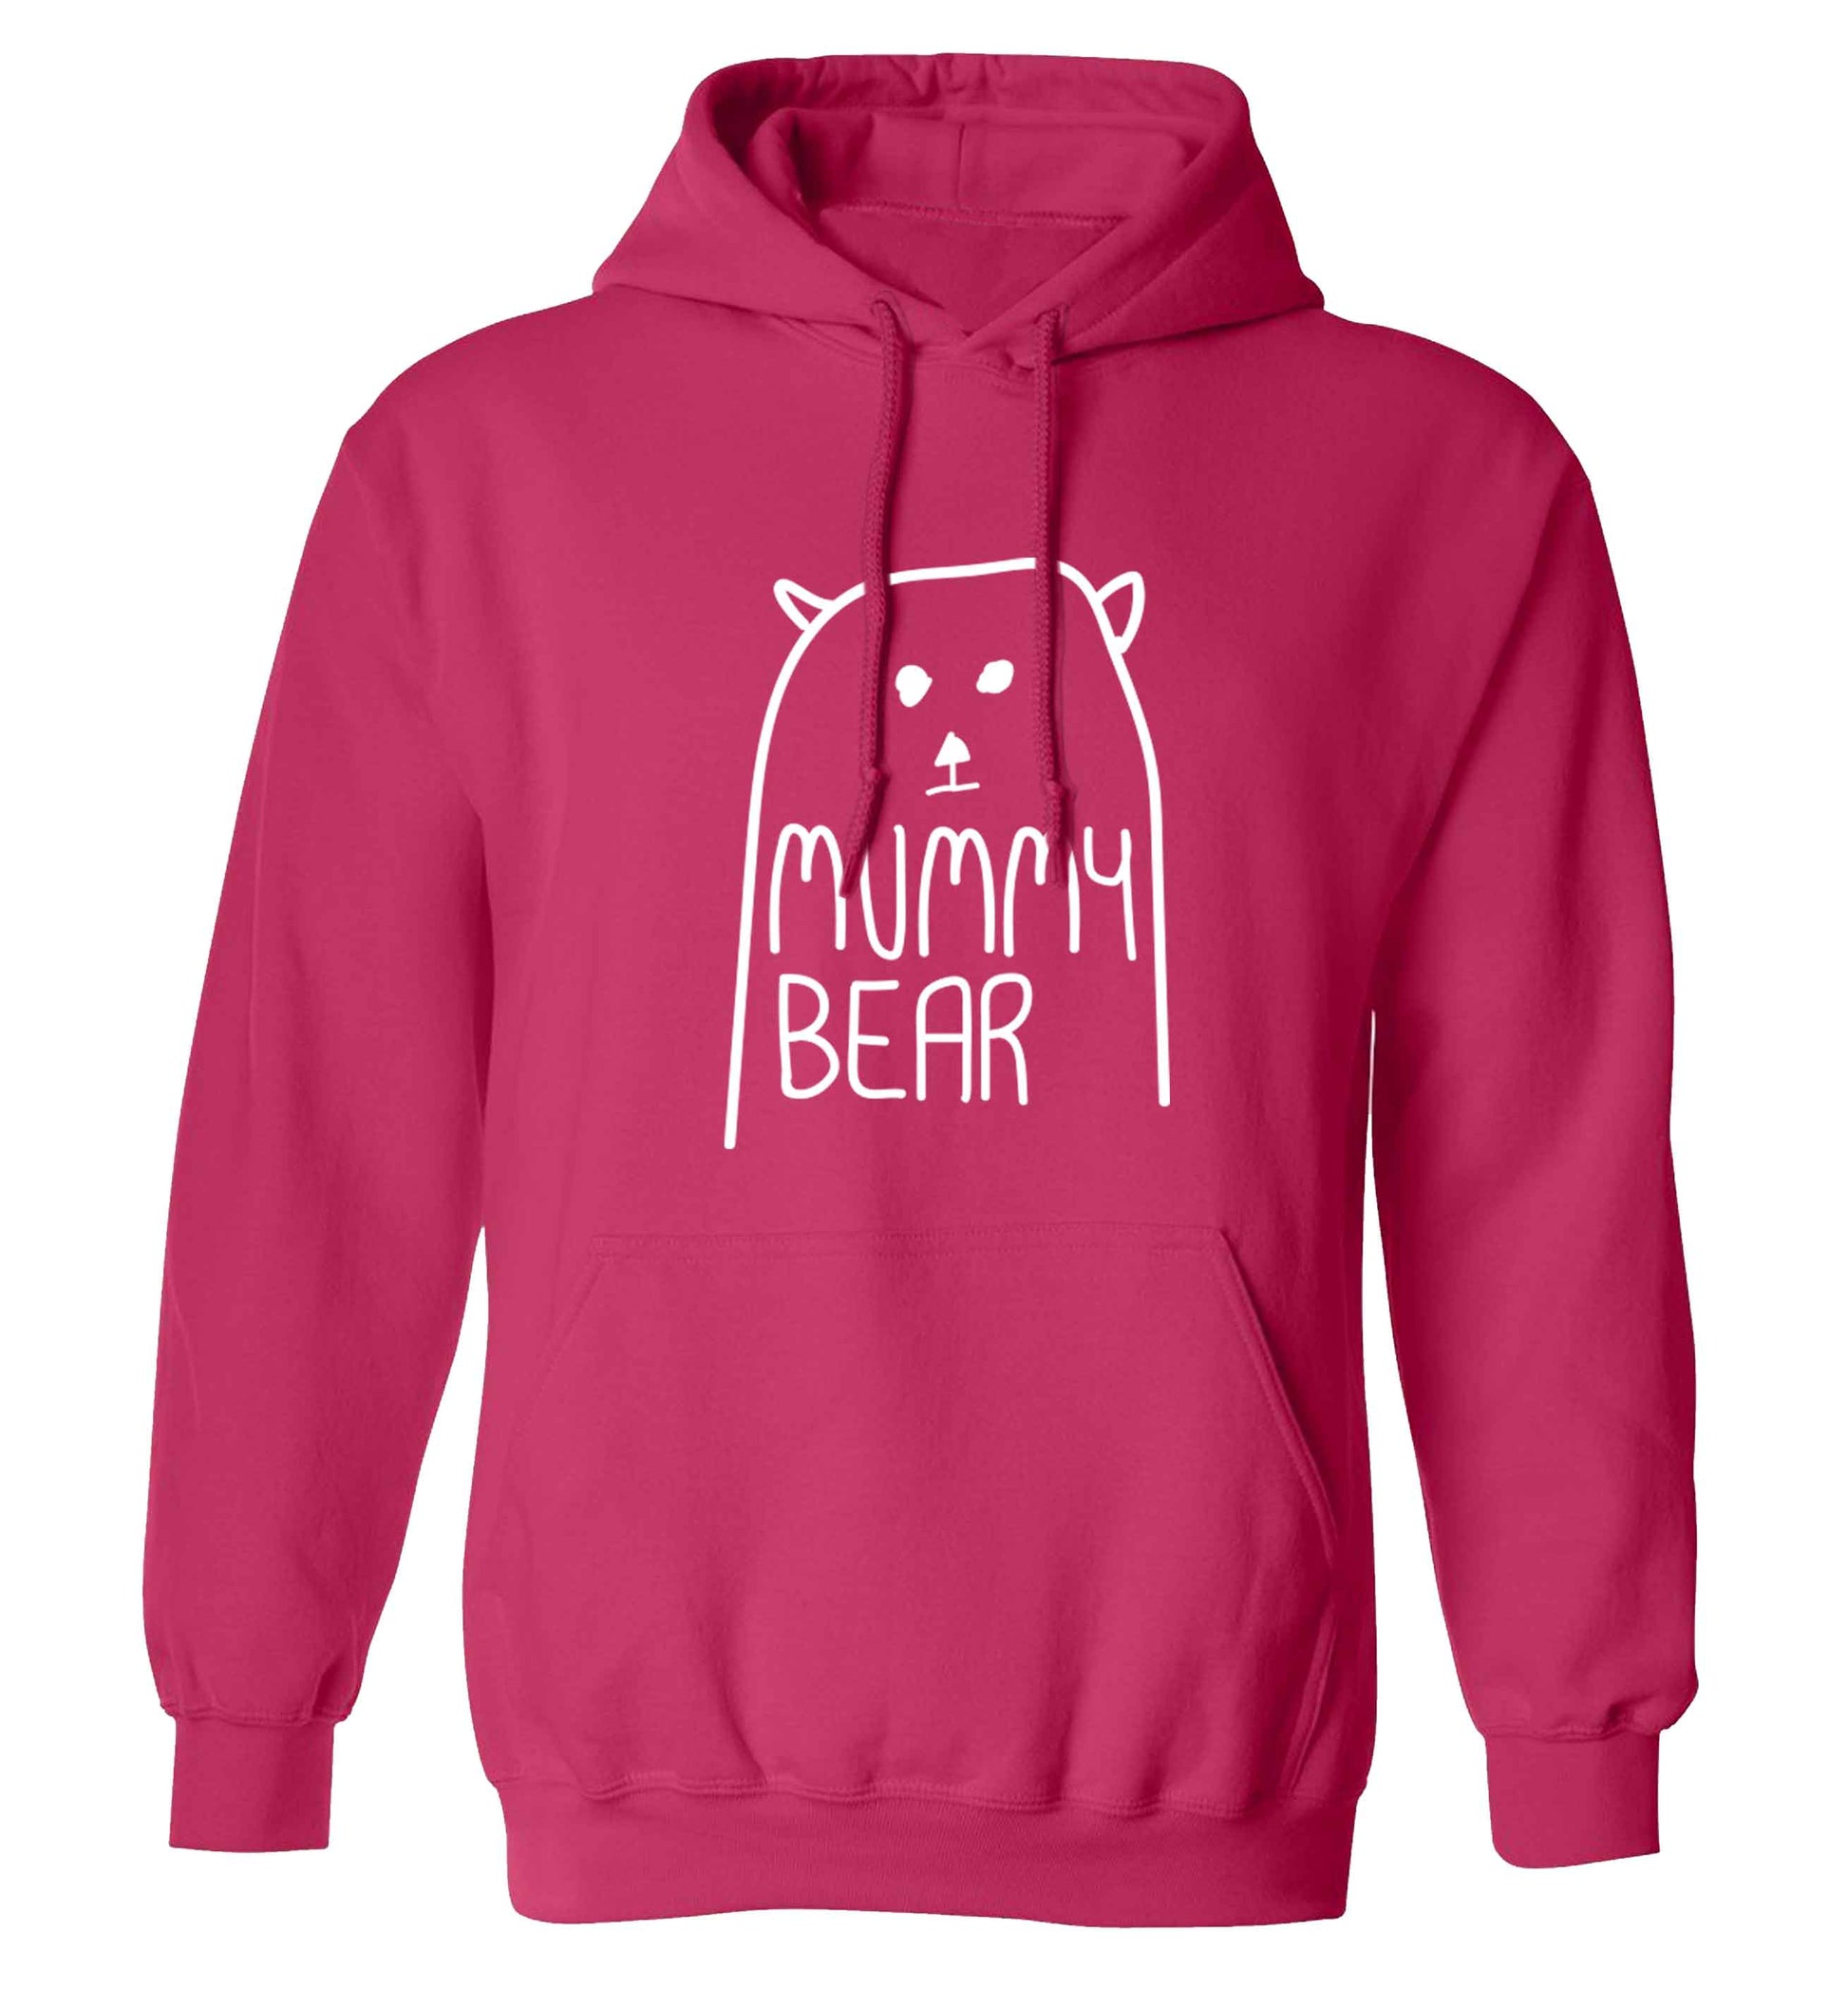 Mummy bear adults unisex pink hoodie 2XL